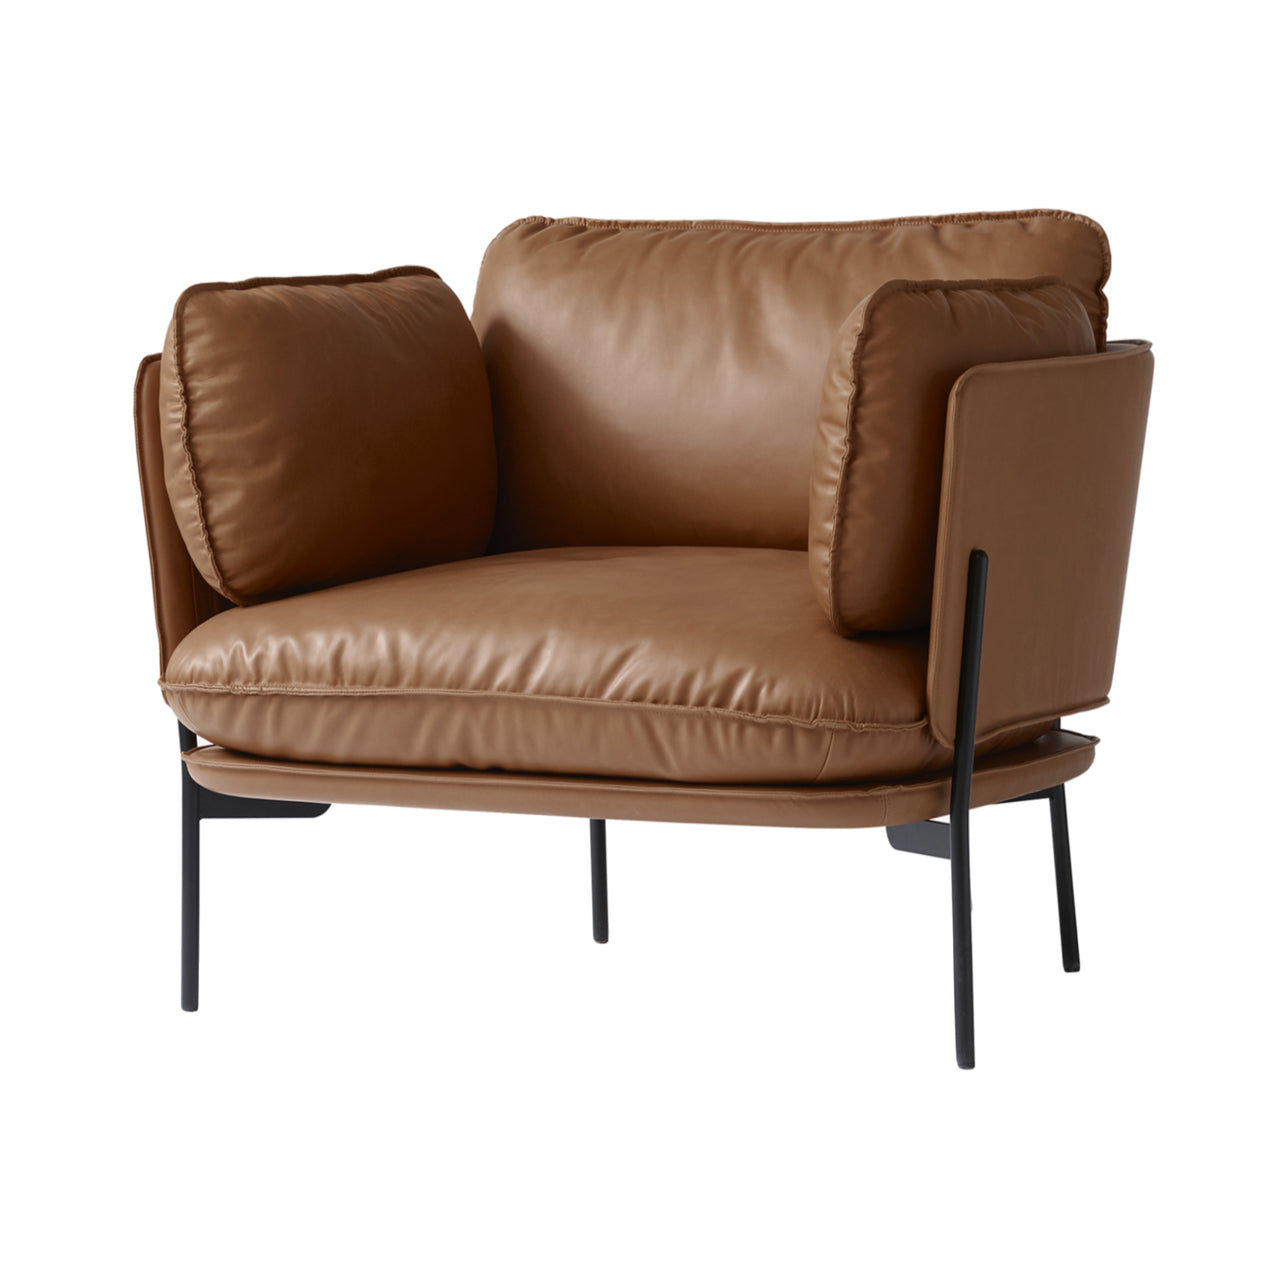 Cloud LN1 Lounge Chair: Black